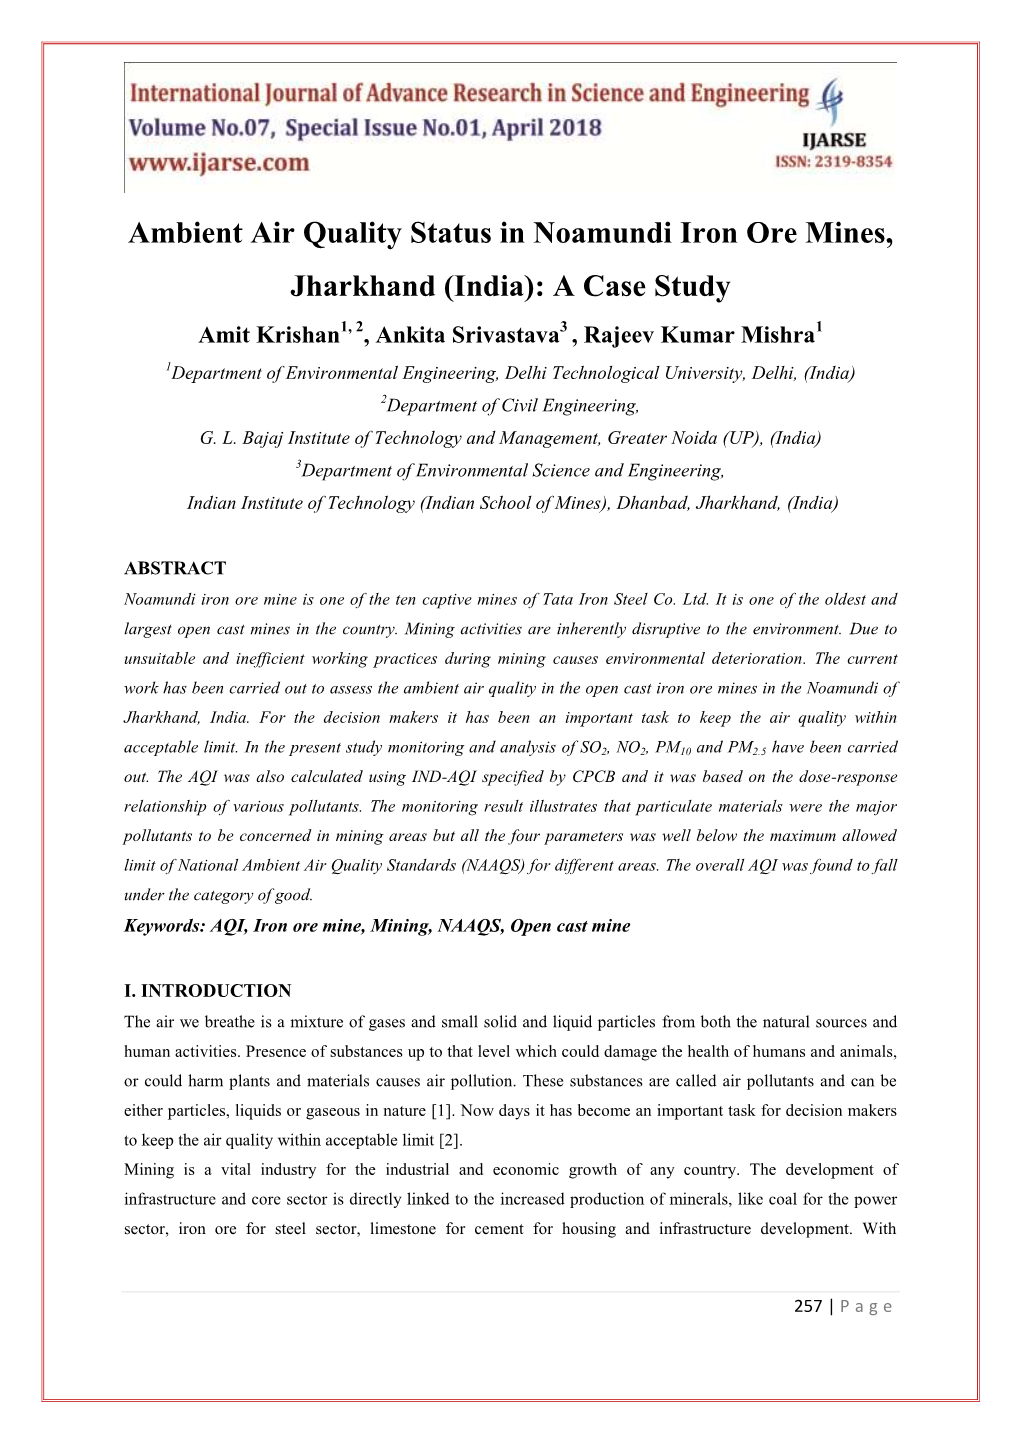 Ambient Air Quality Status in Noamundi Iron Ore Mines